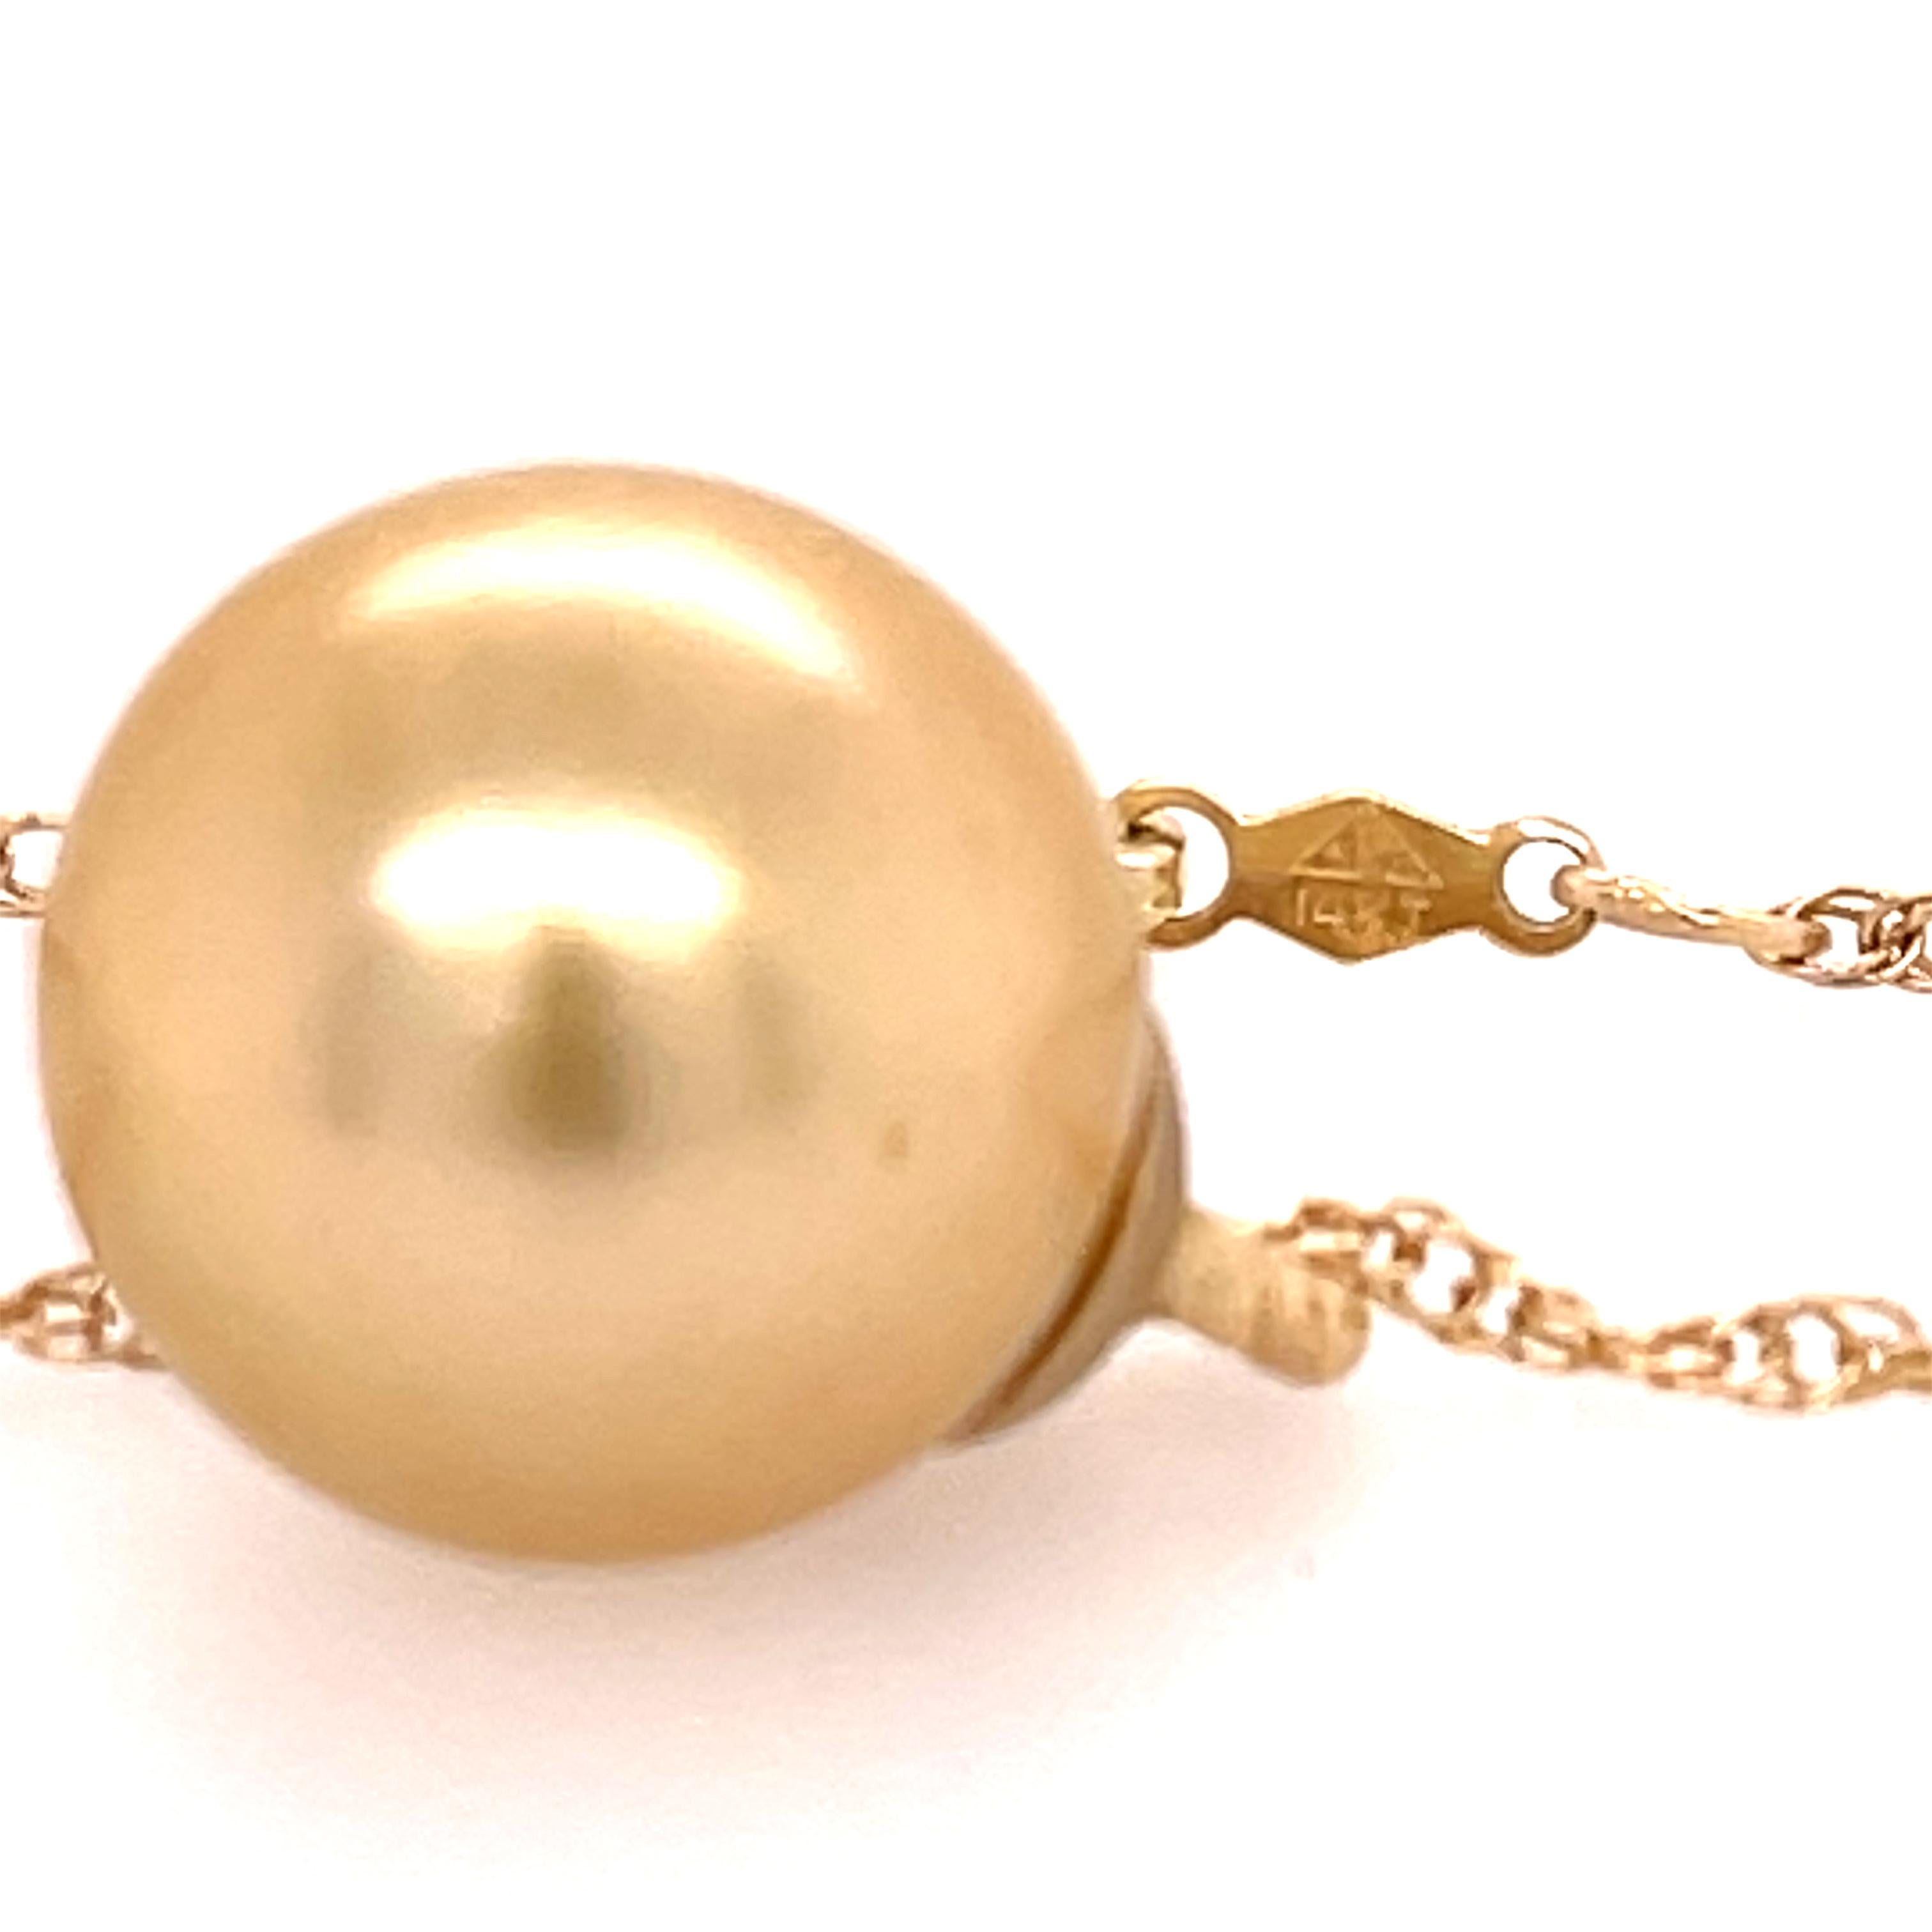 Uncut Gold South Sea Pearl Pendant Necklace For Sale